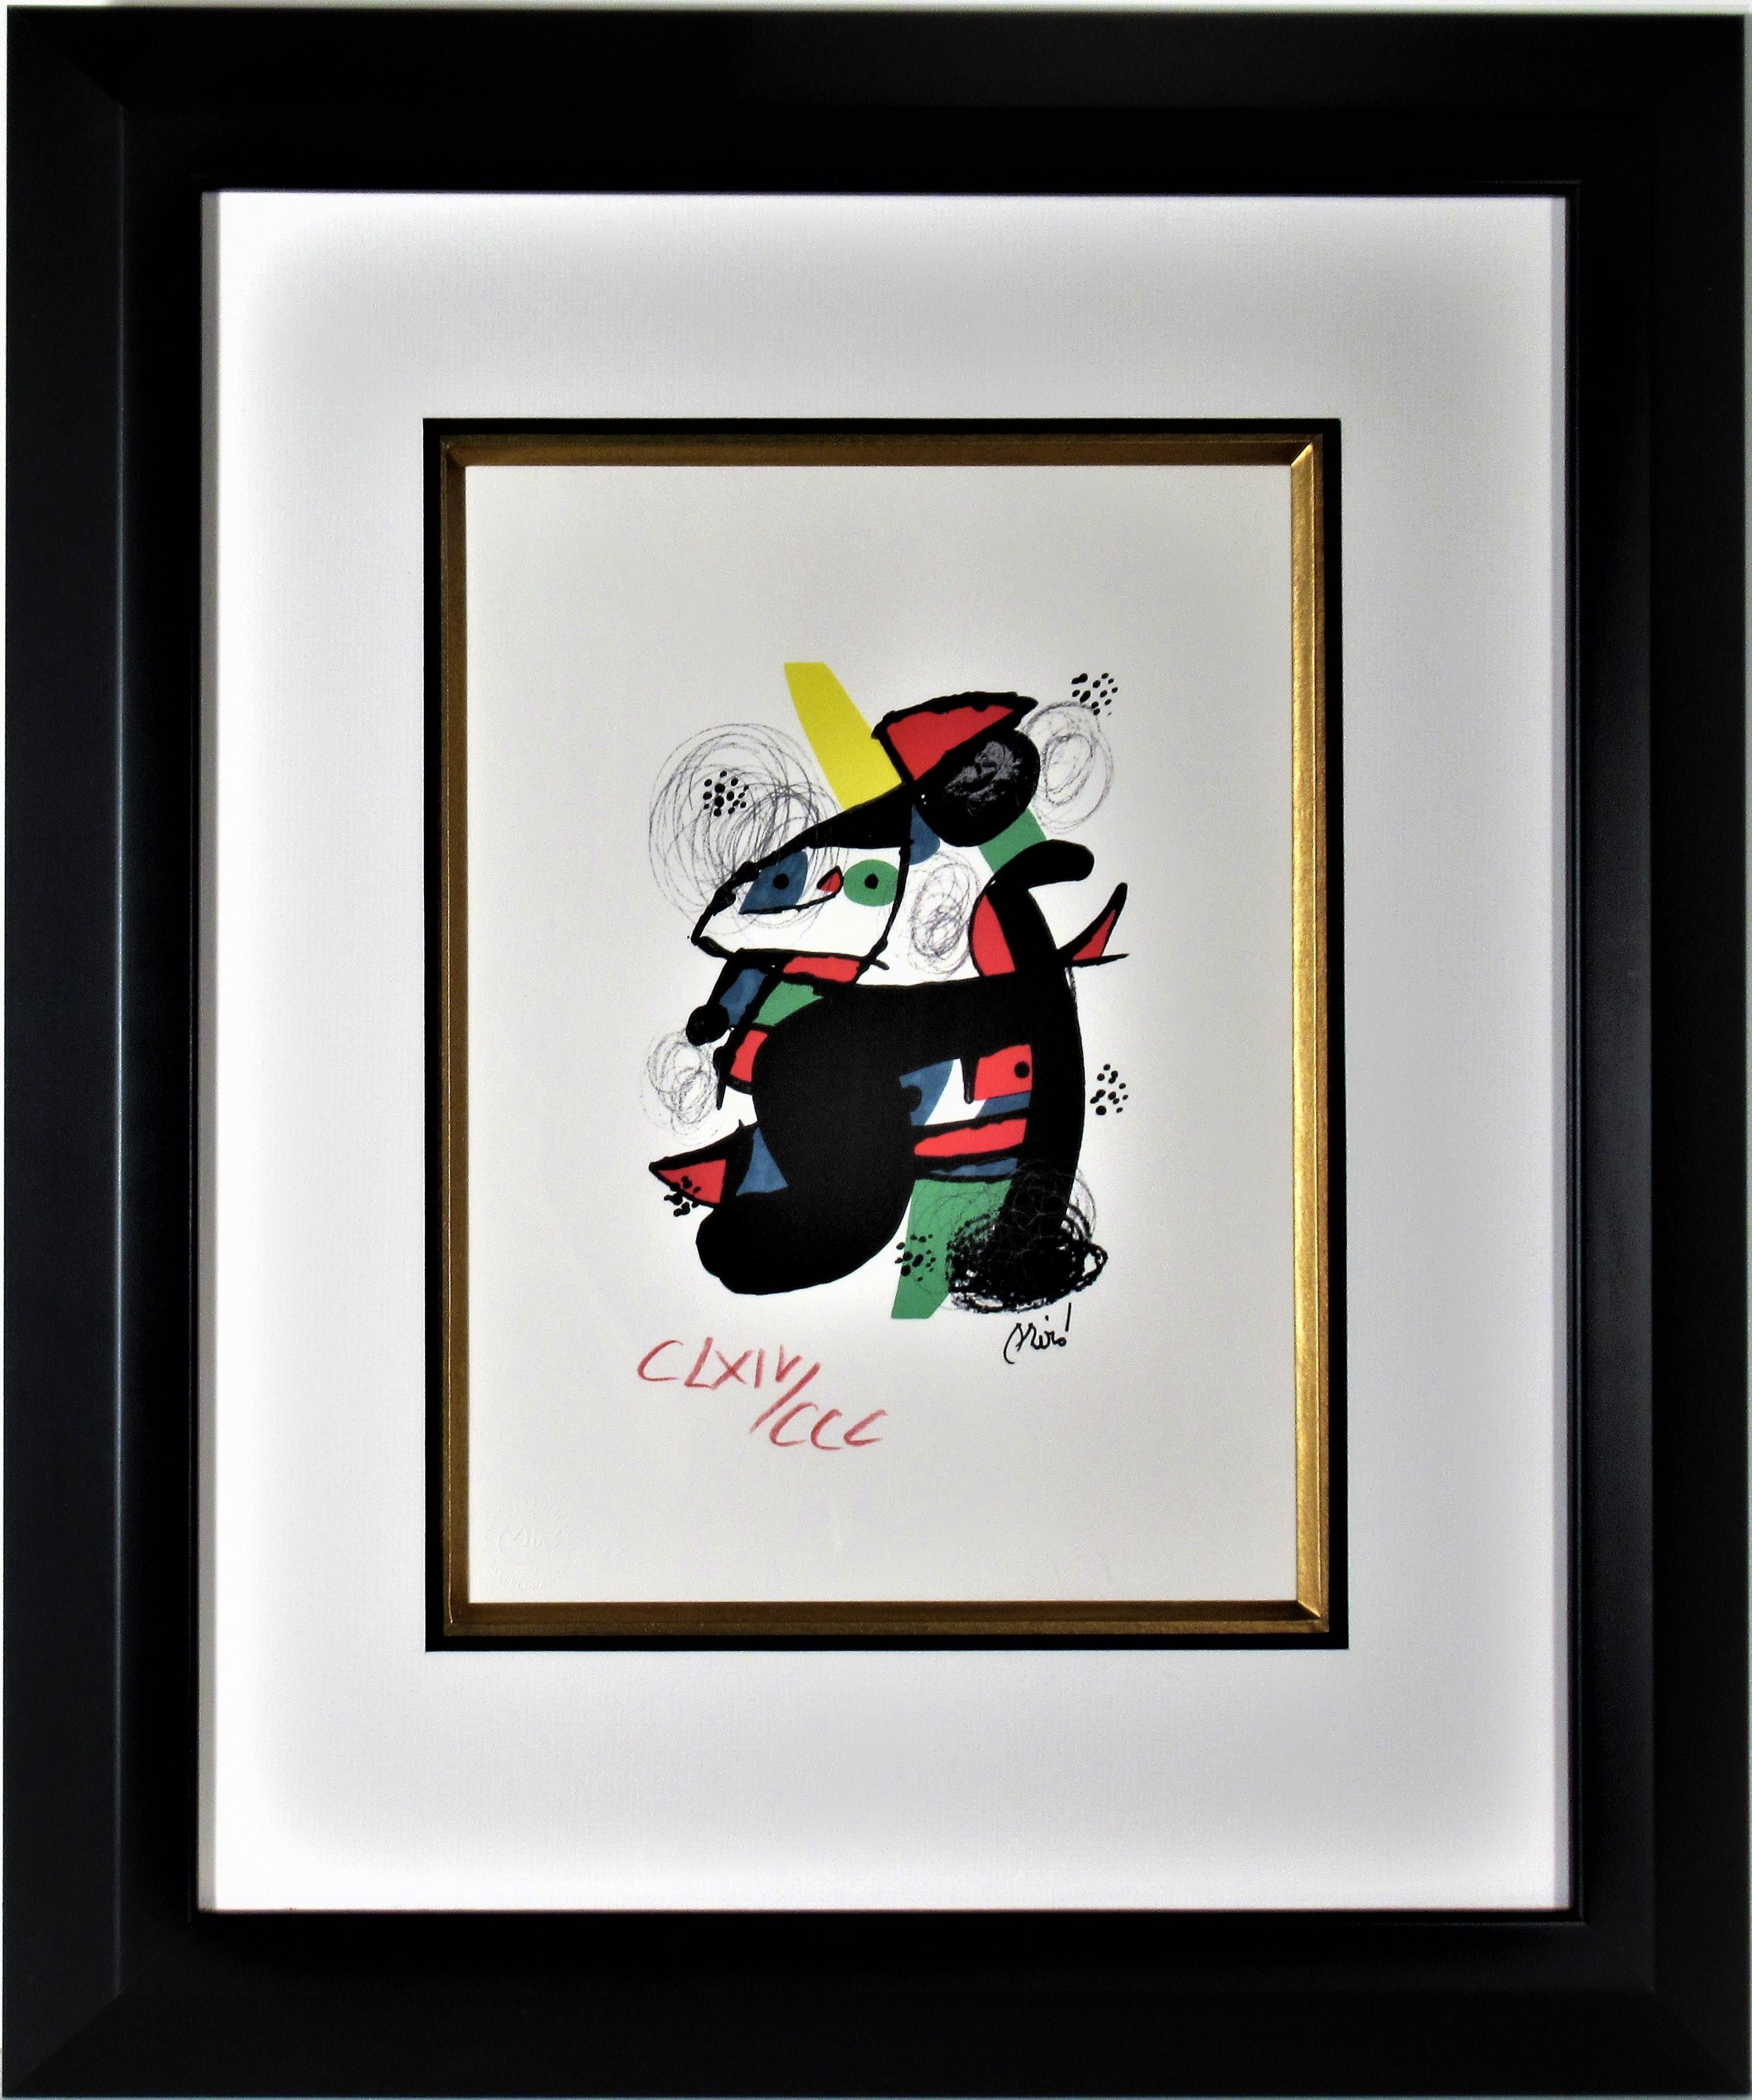 (after) Joan Miró Abstract Print - La Melodie Acide II